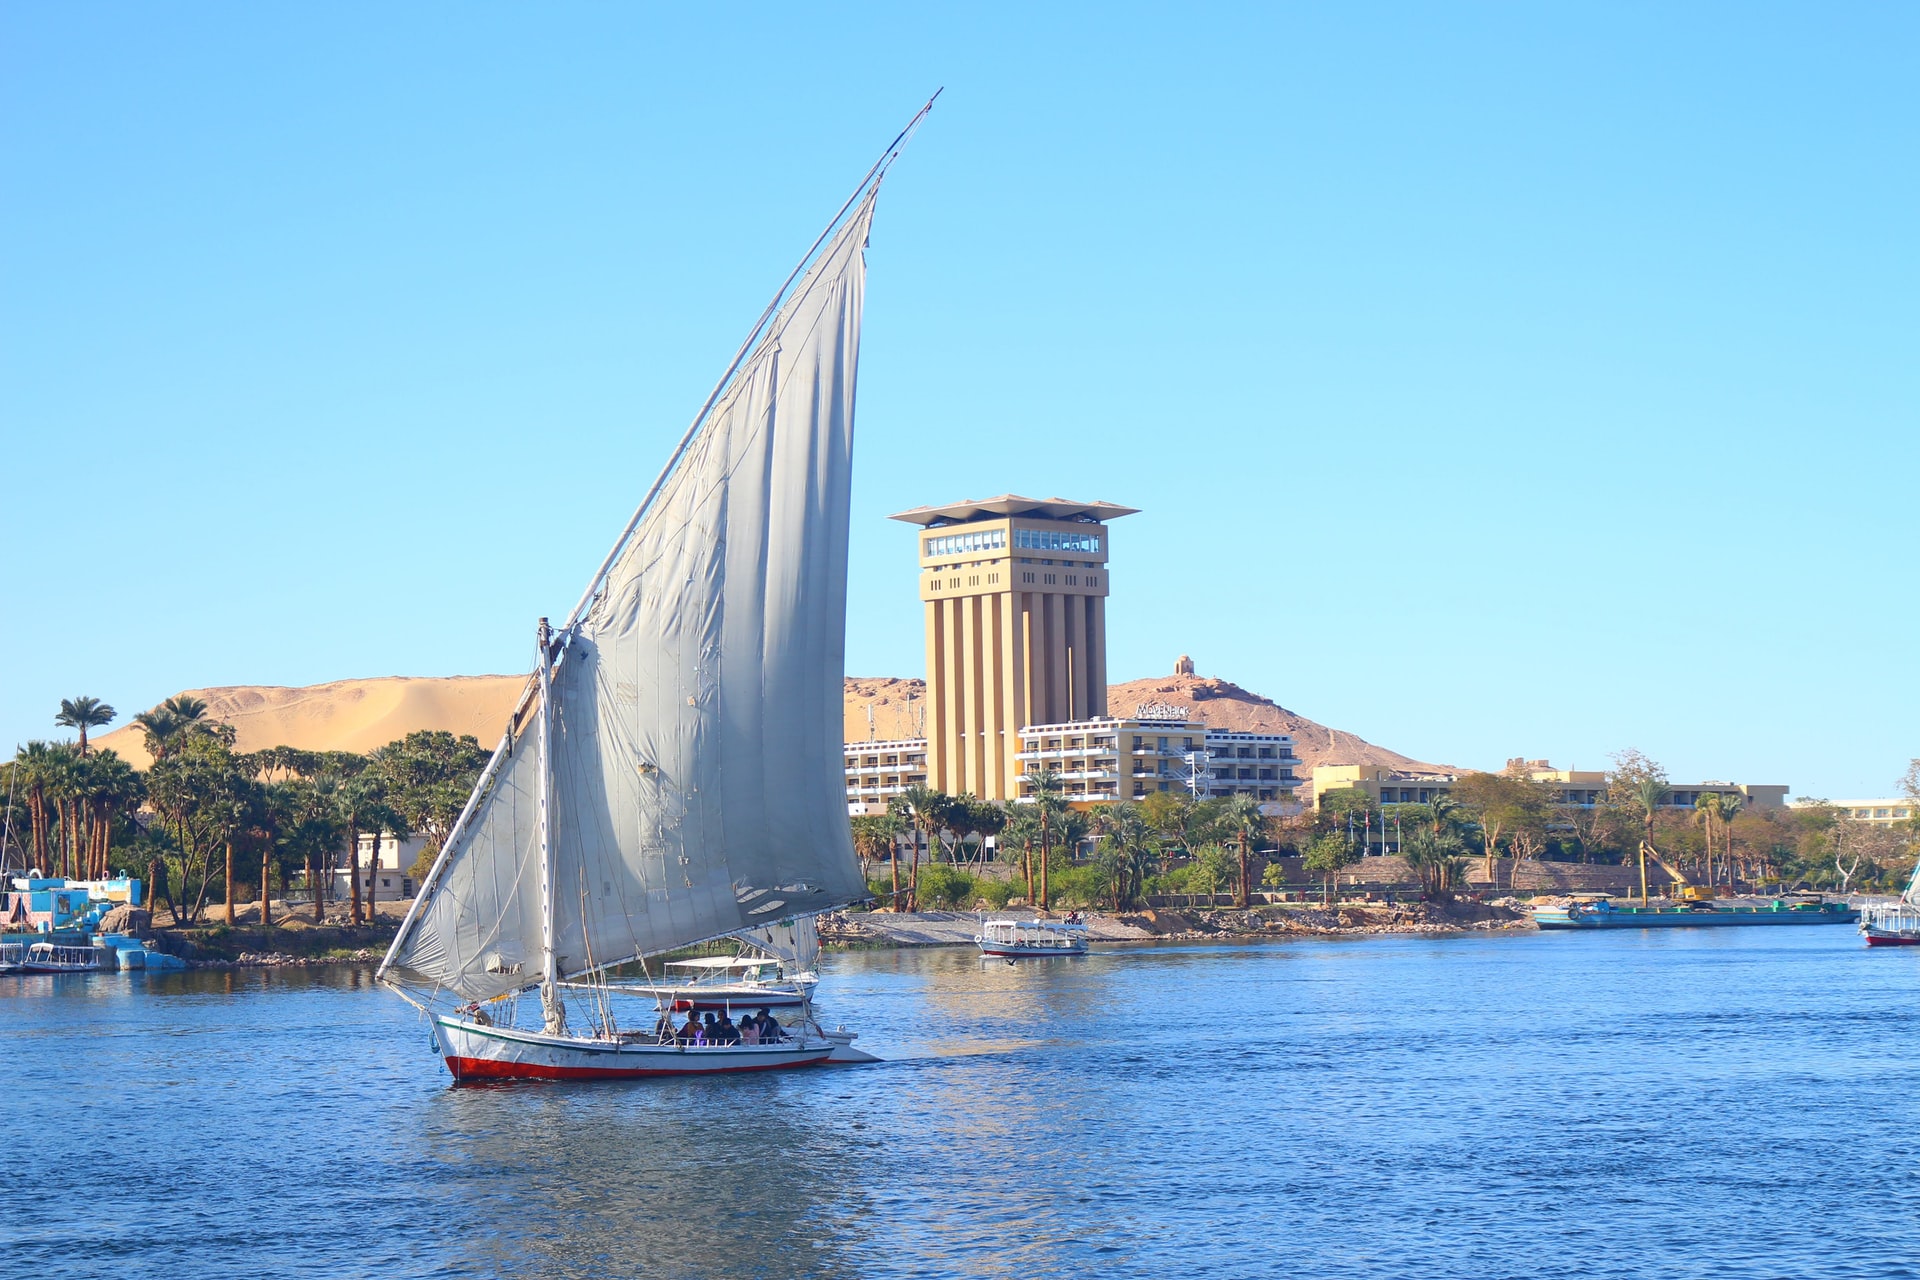 City of Aswan in Egypt